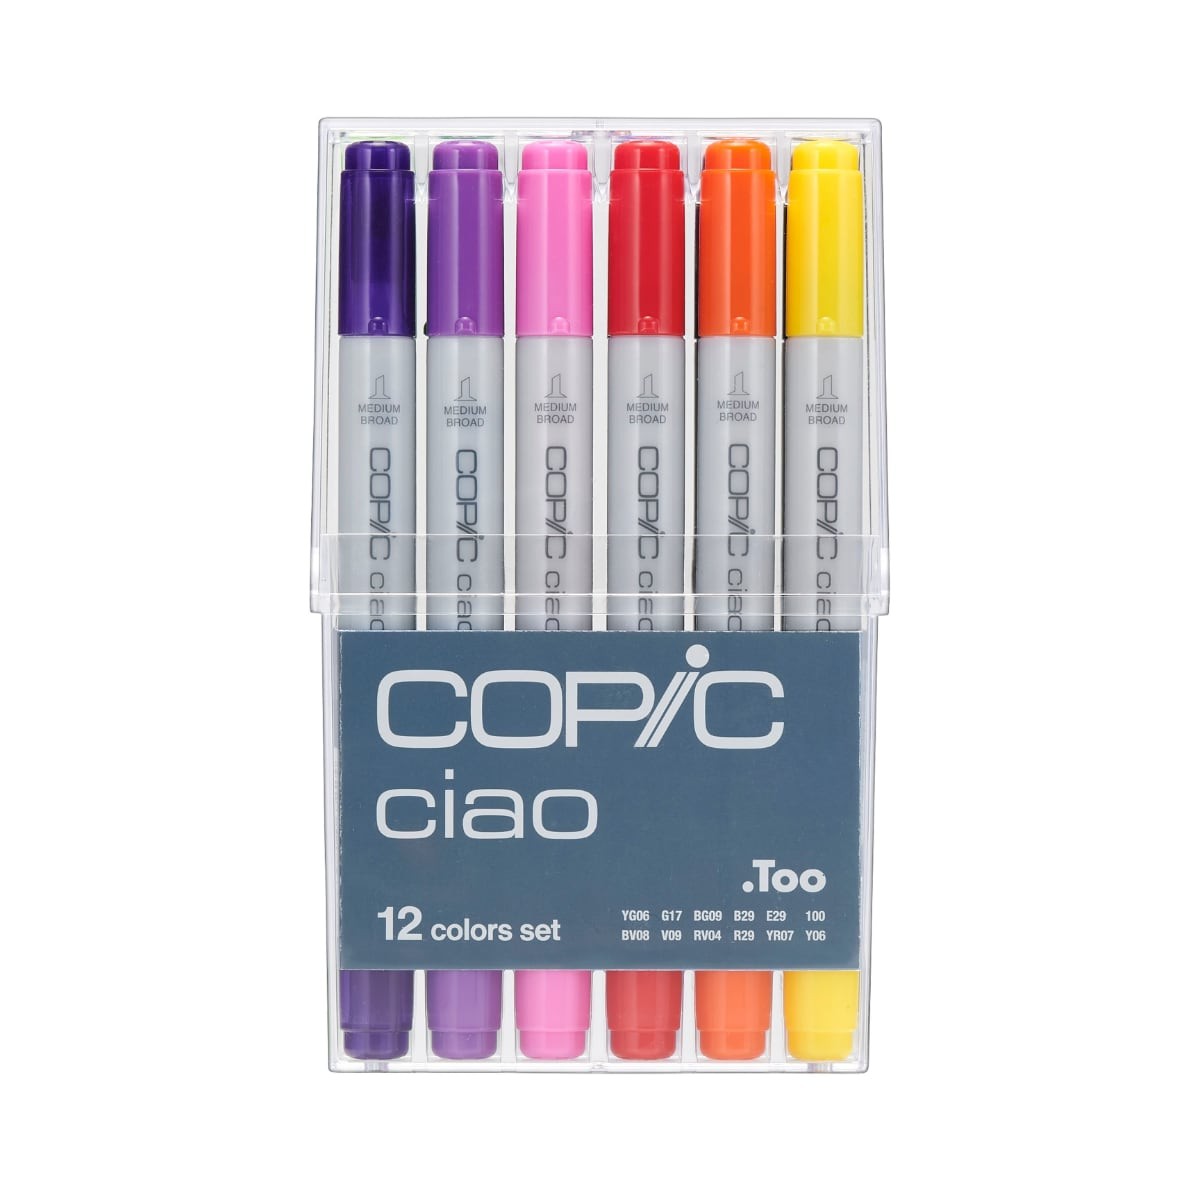 Copic Ciao 12 colors set